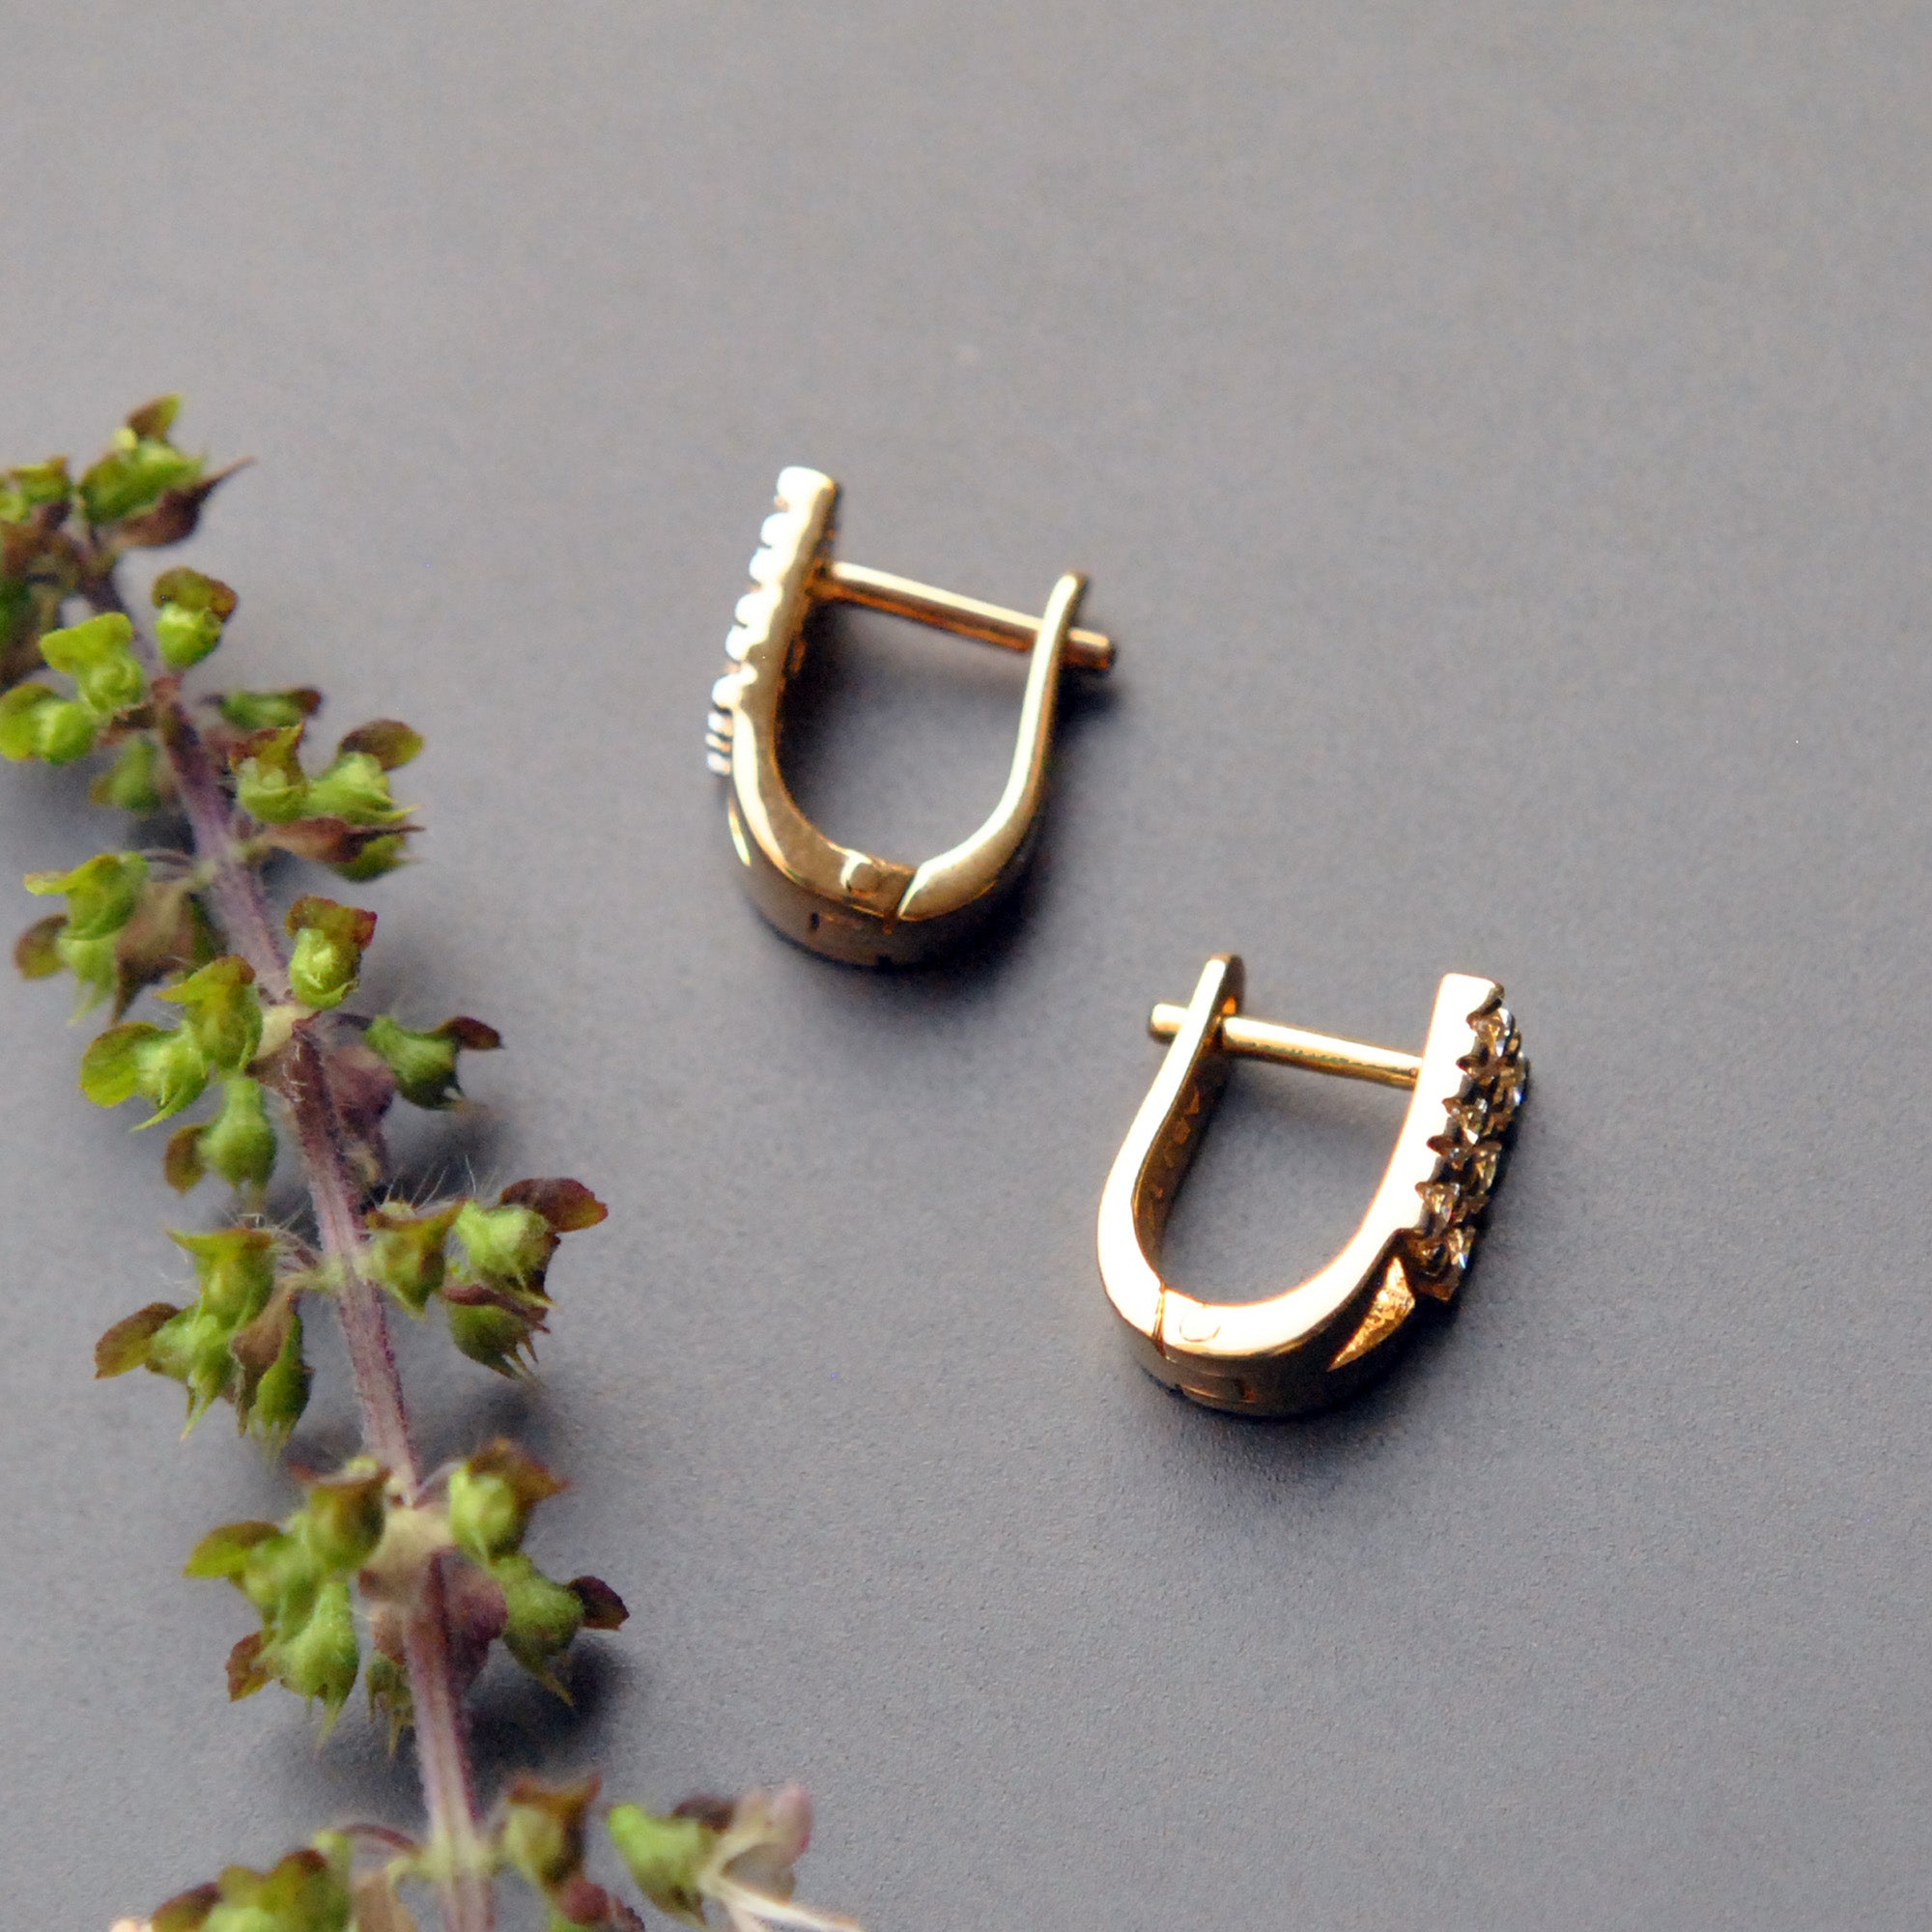 Tiffany Lock Earrings in Rose Gold, Medium | Tiffany & Co.